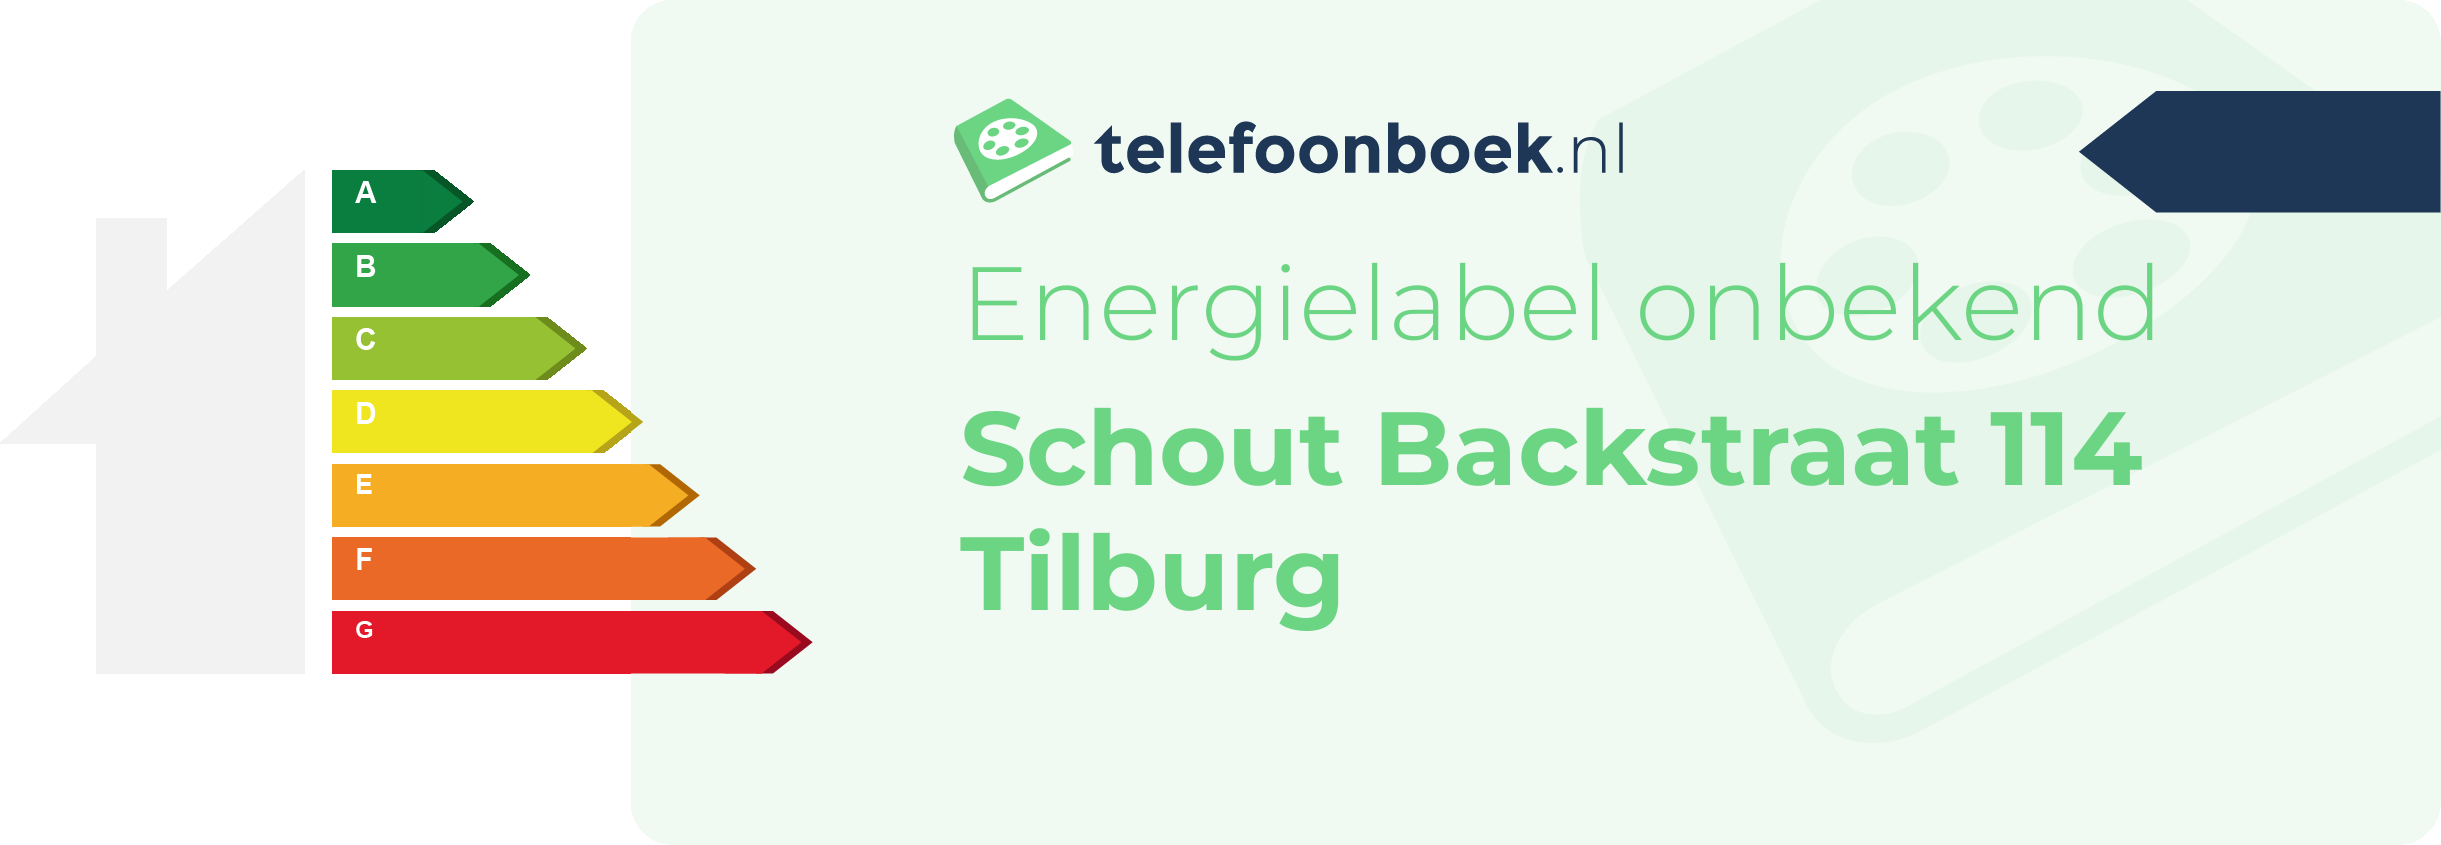 Energielabel Schout Backstraat 114 Tilburg